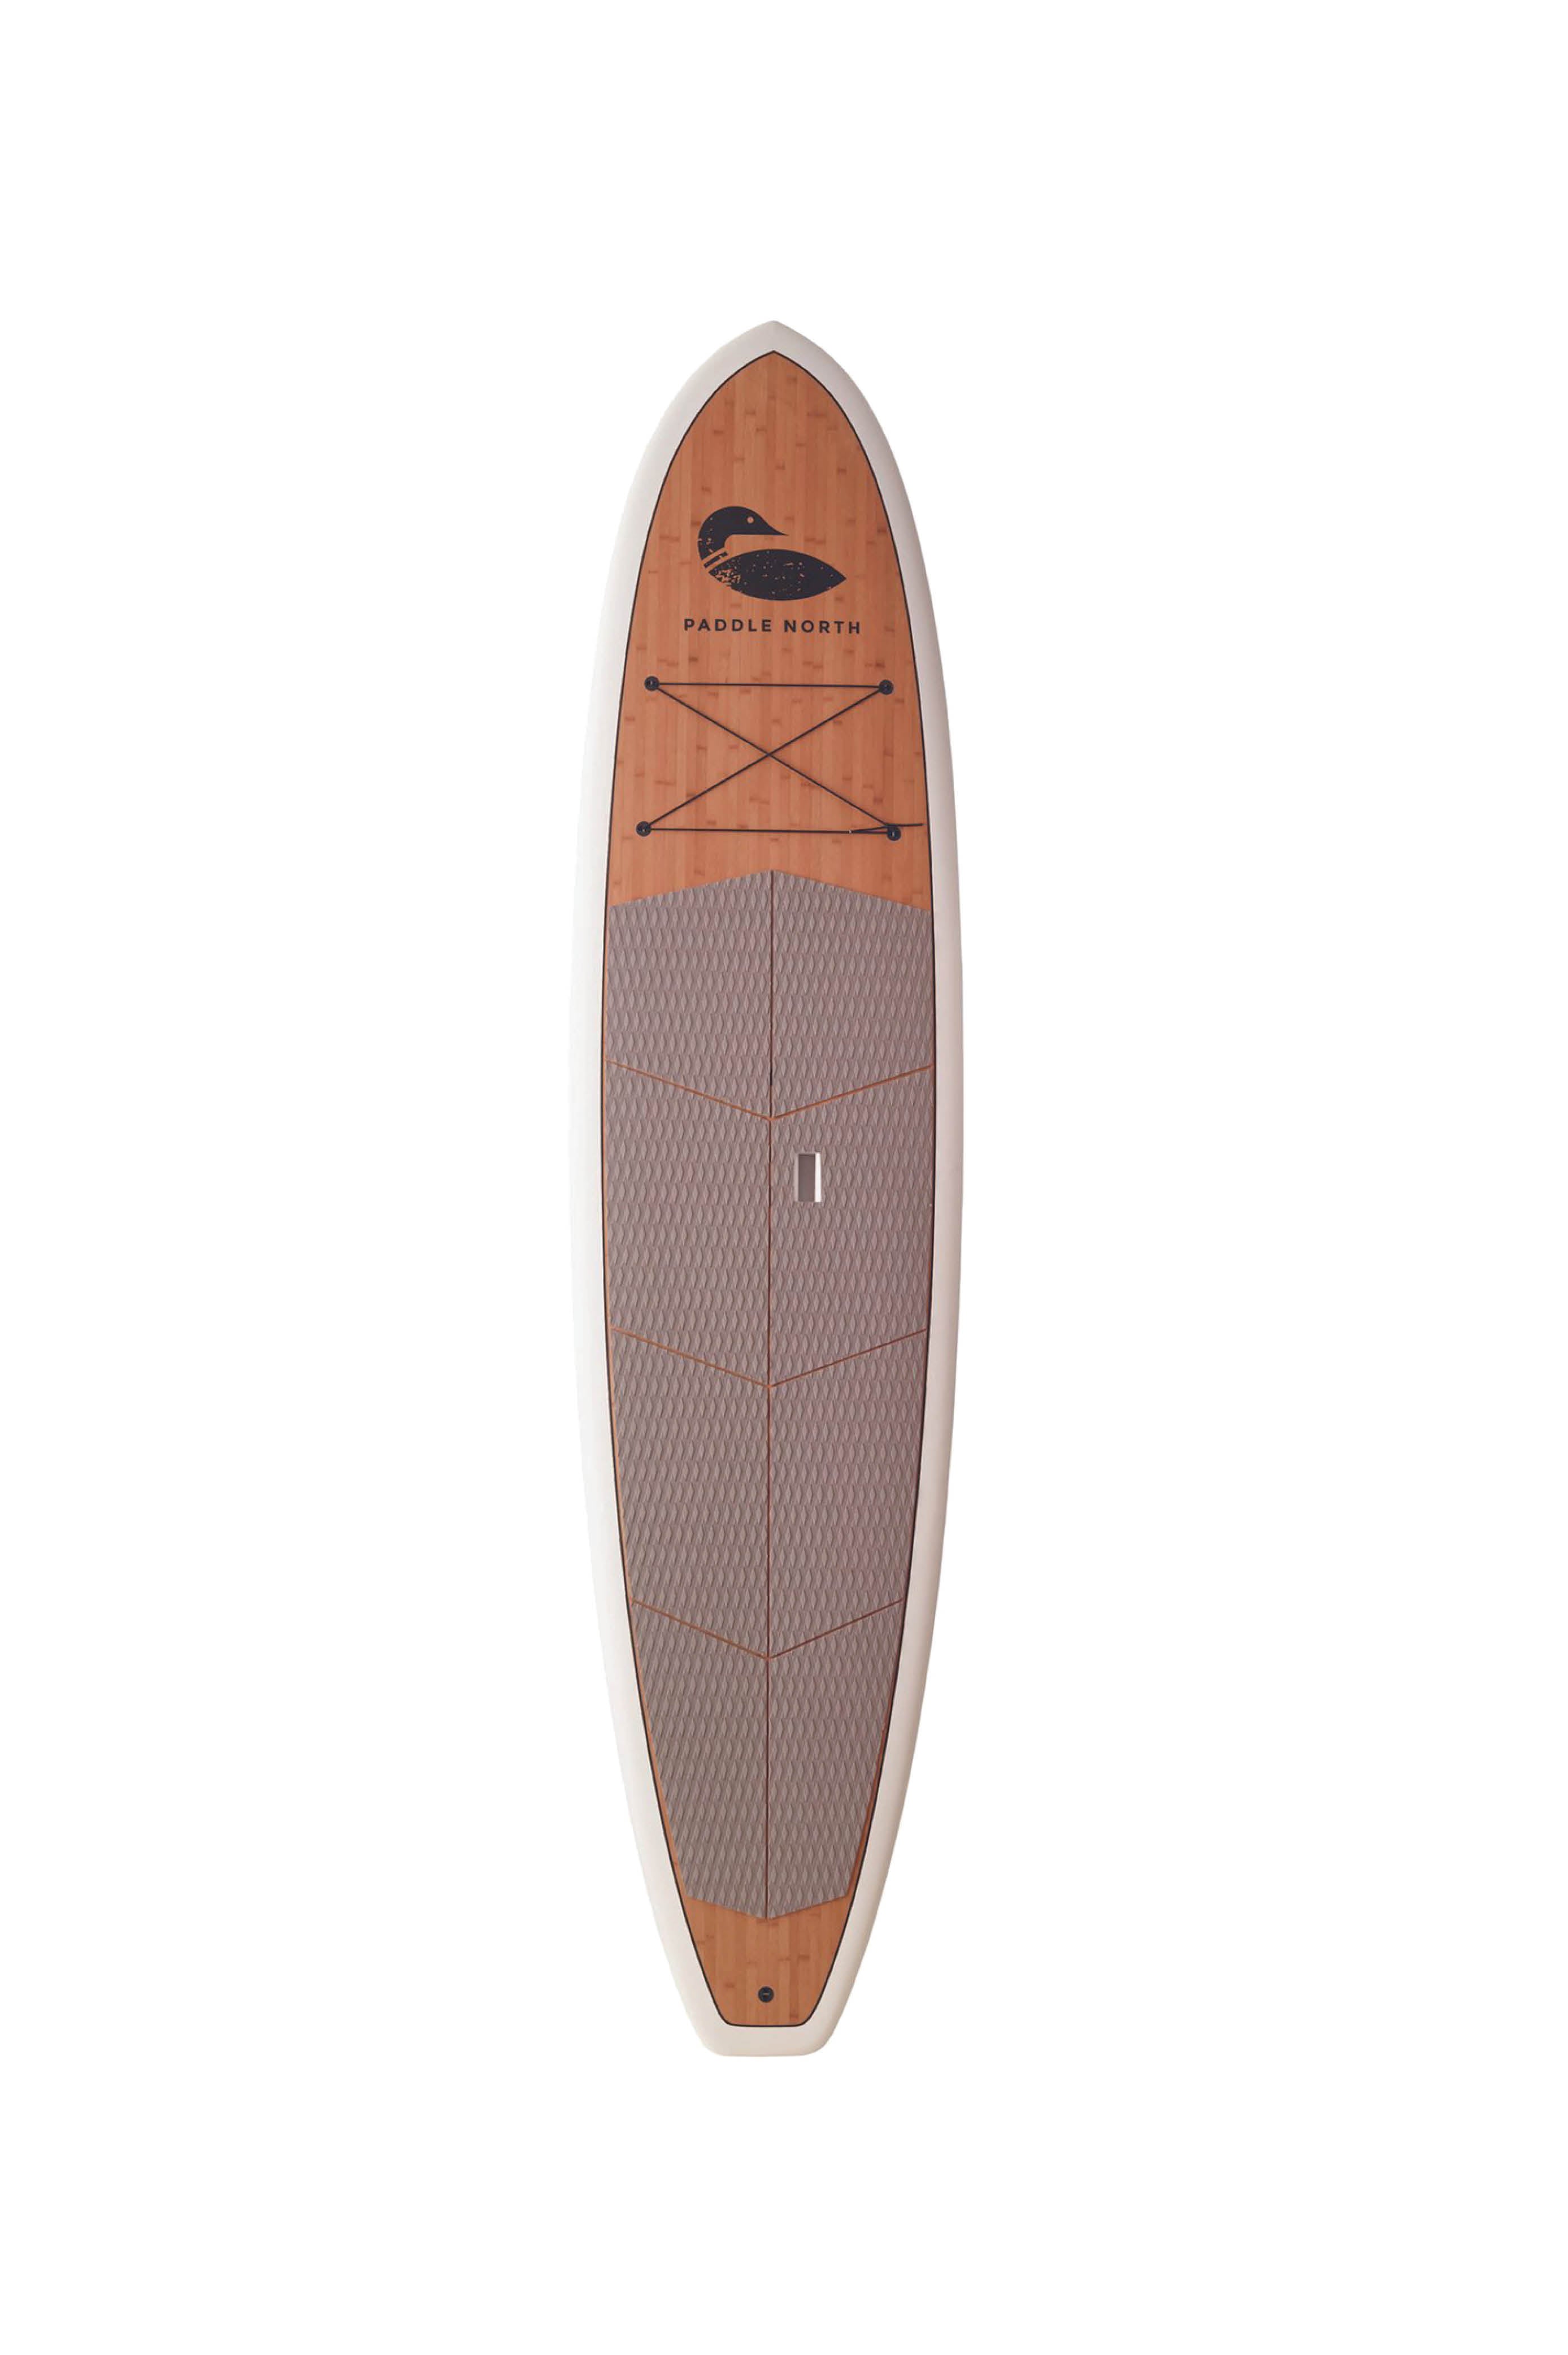 Certified Refurbished: 10'6'' Loon Paddle Board